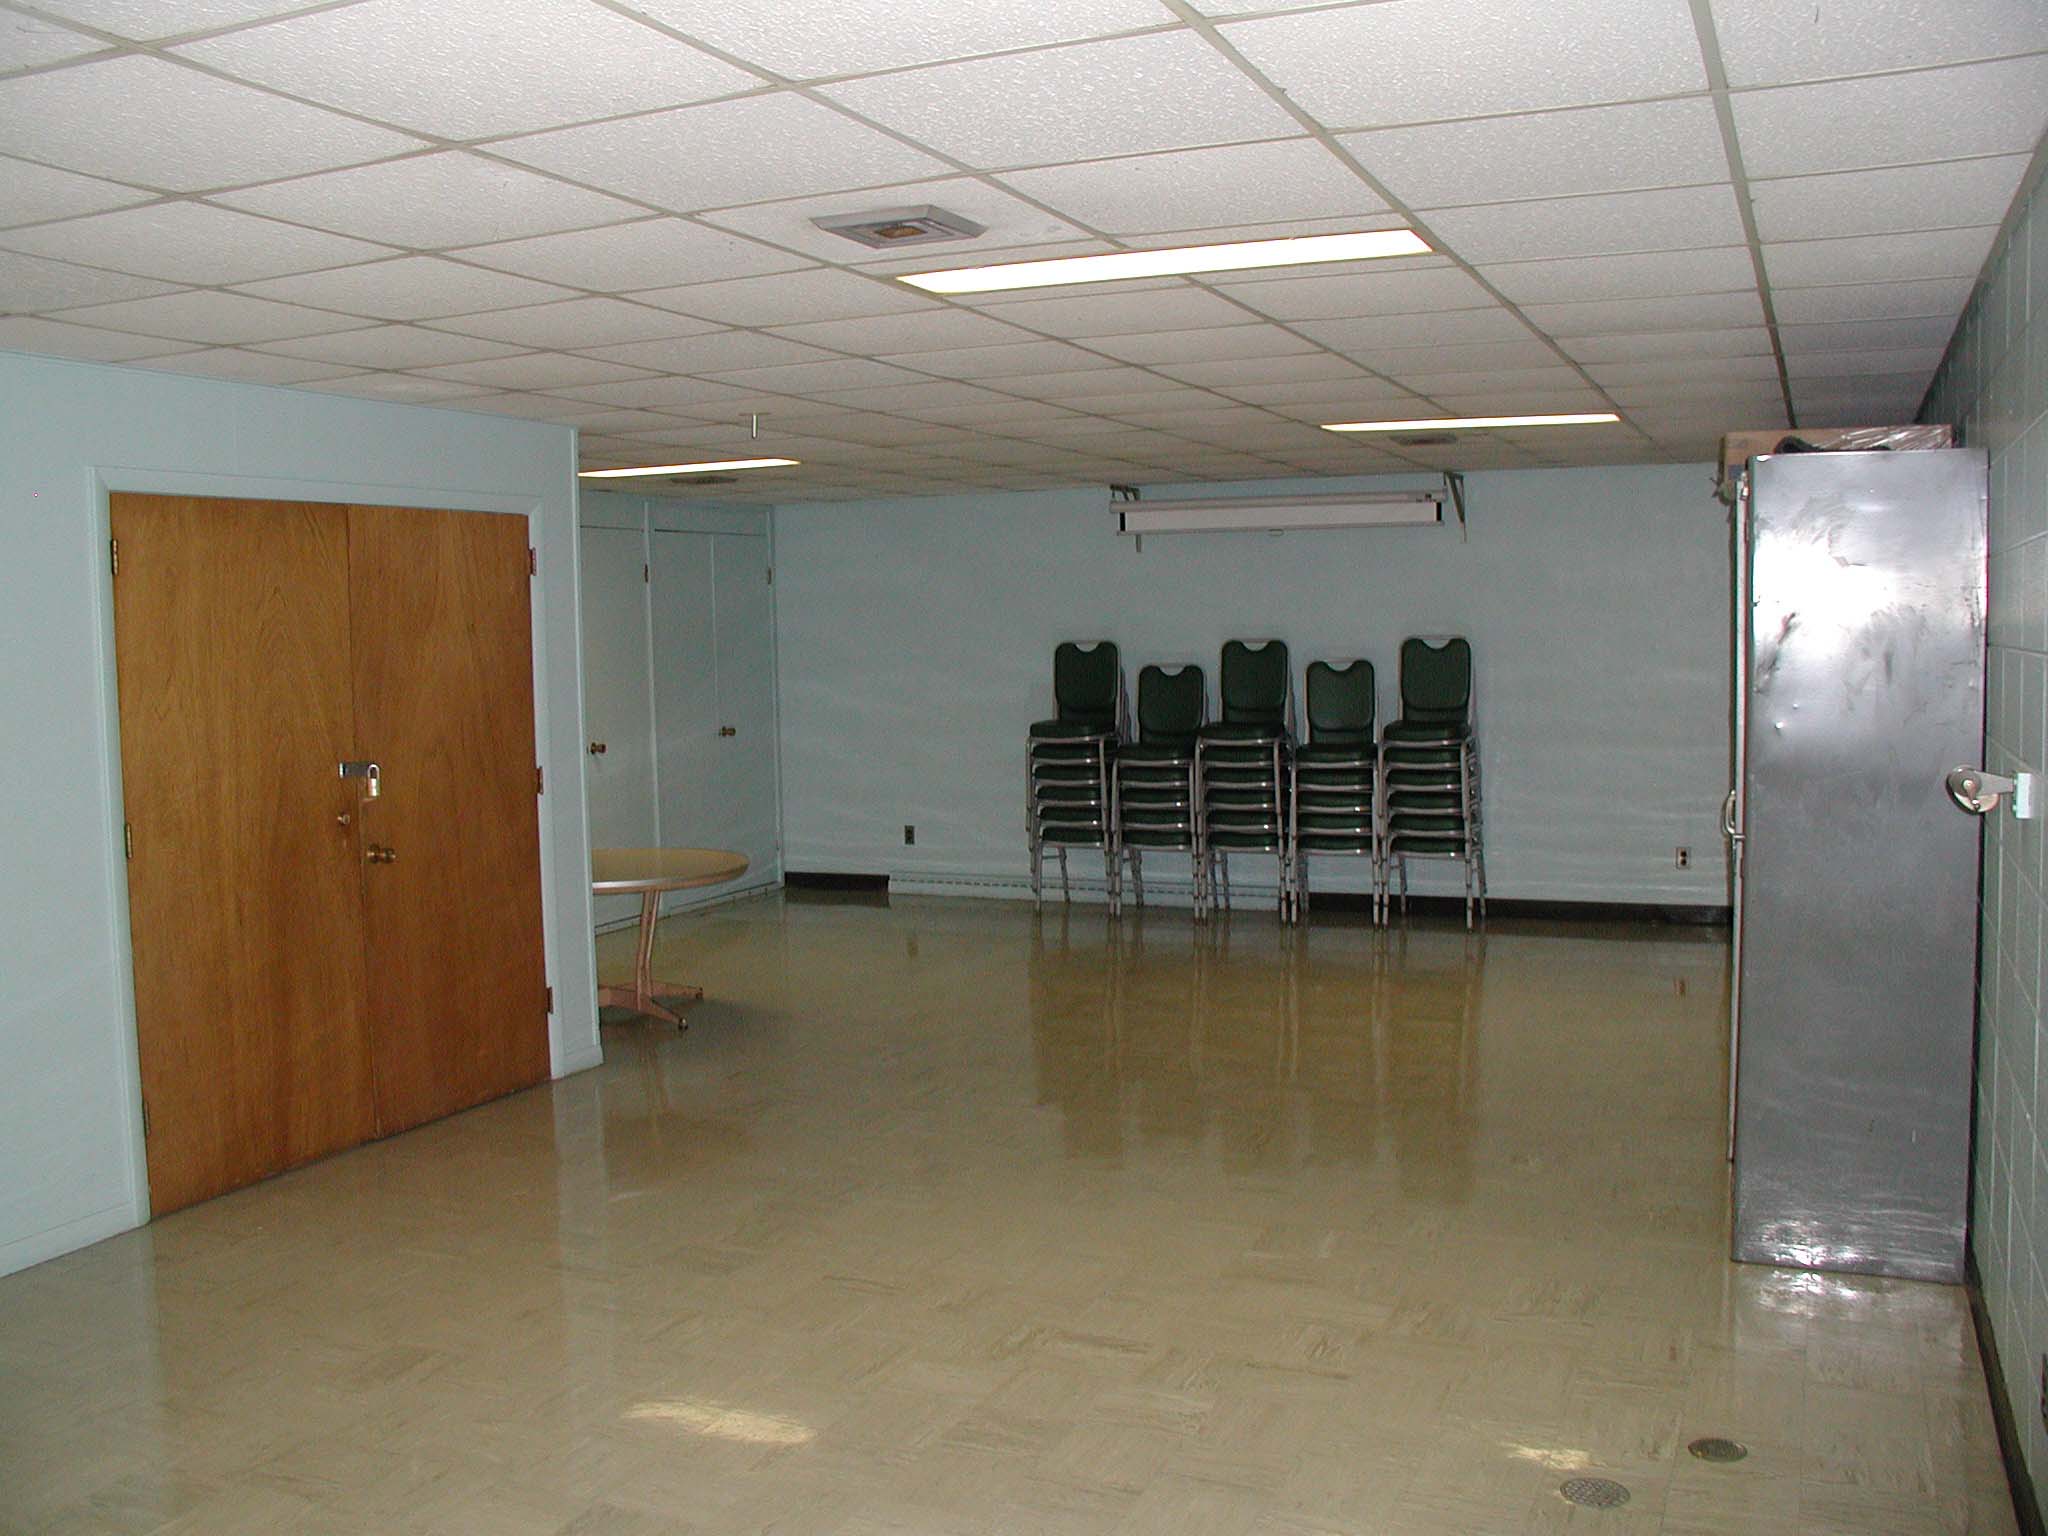 Inside Lower Heckman Meeting Area